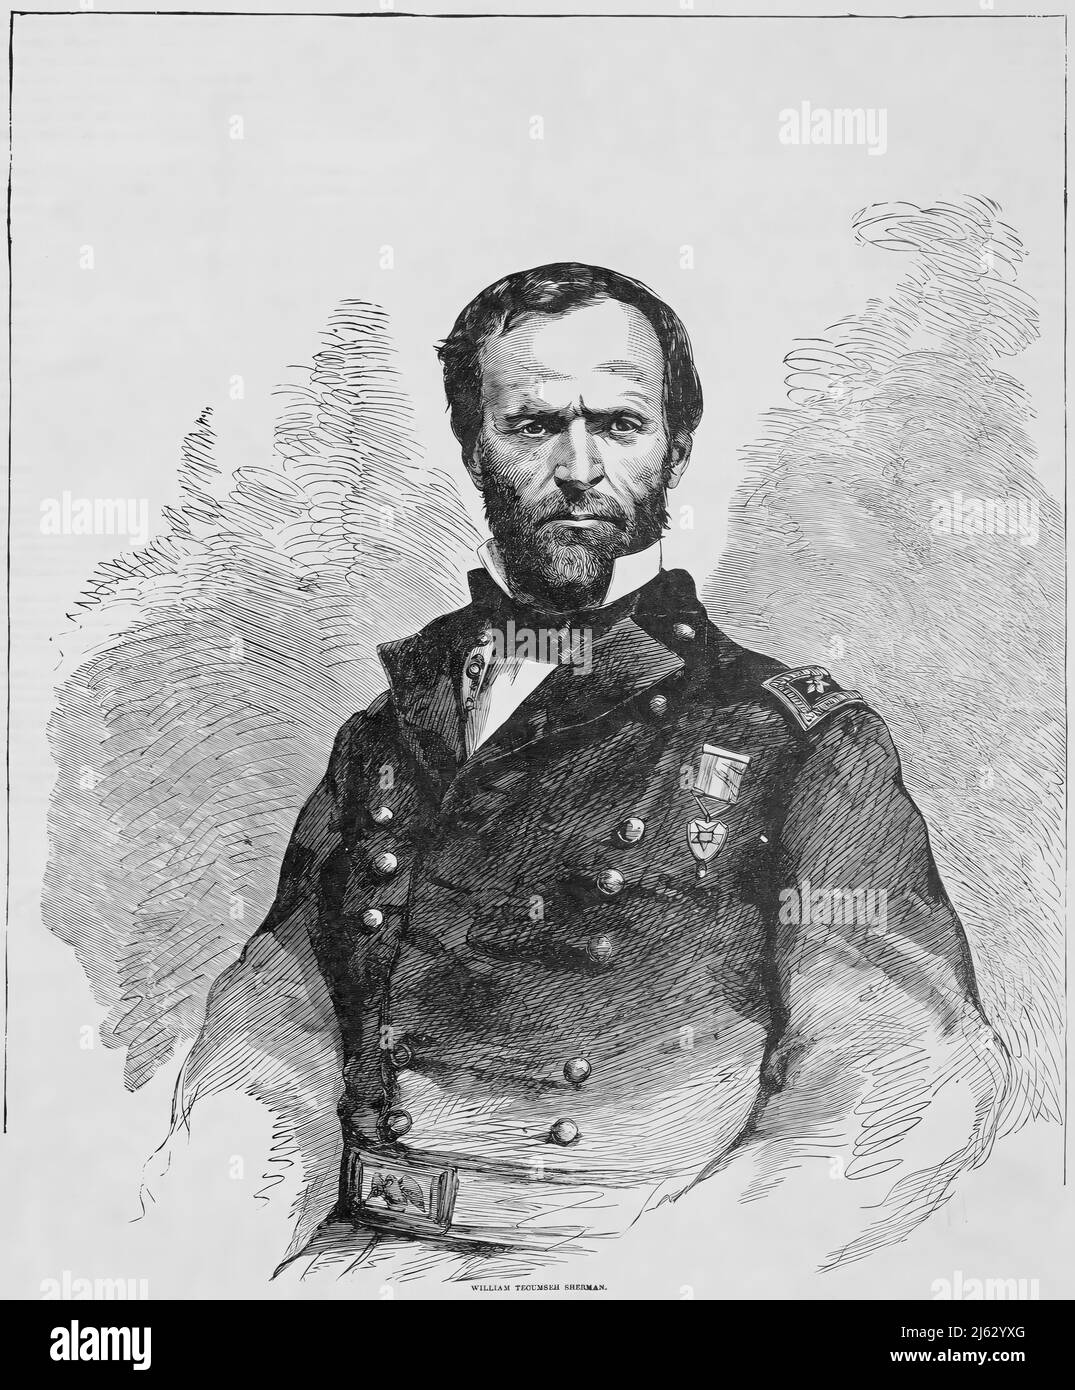 Portrait of William Tecumseh Sherman, Union Army General in the American Civil War. 19th century illustration Stock Photo